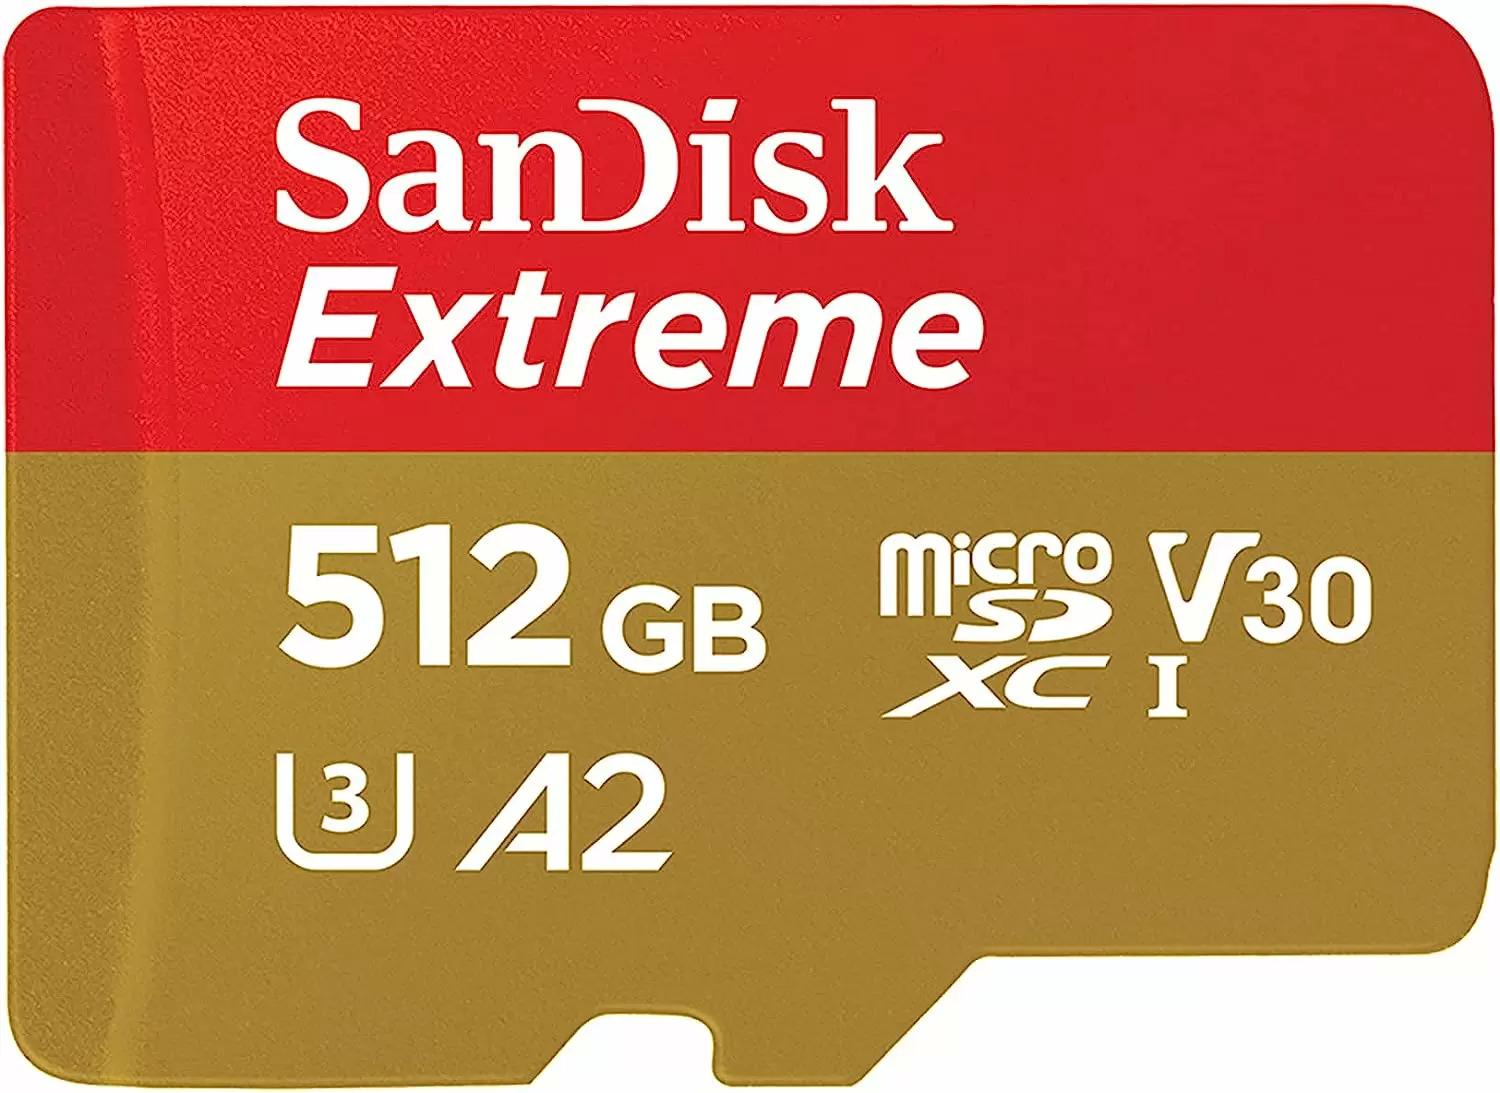 512GB SanDisk Extreme microSDXC Memory Card for $29.99